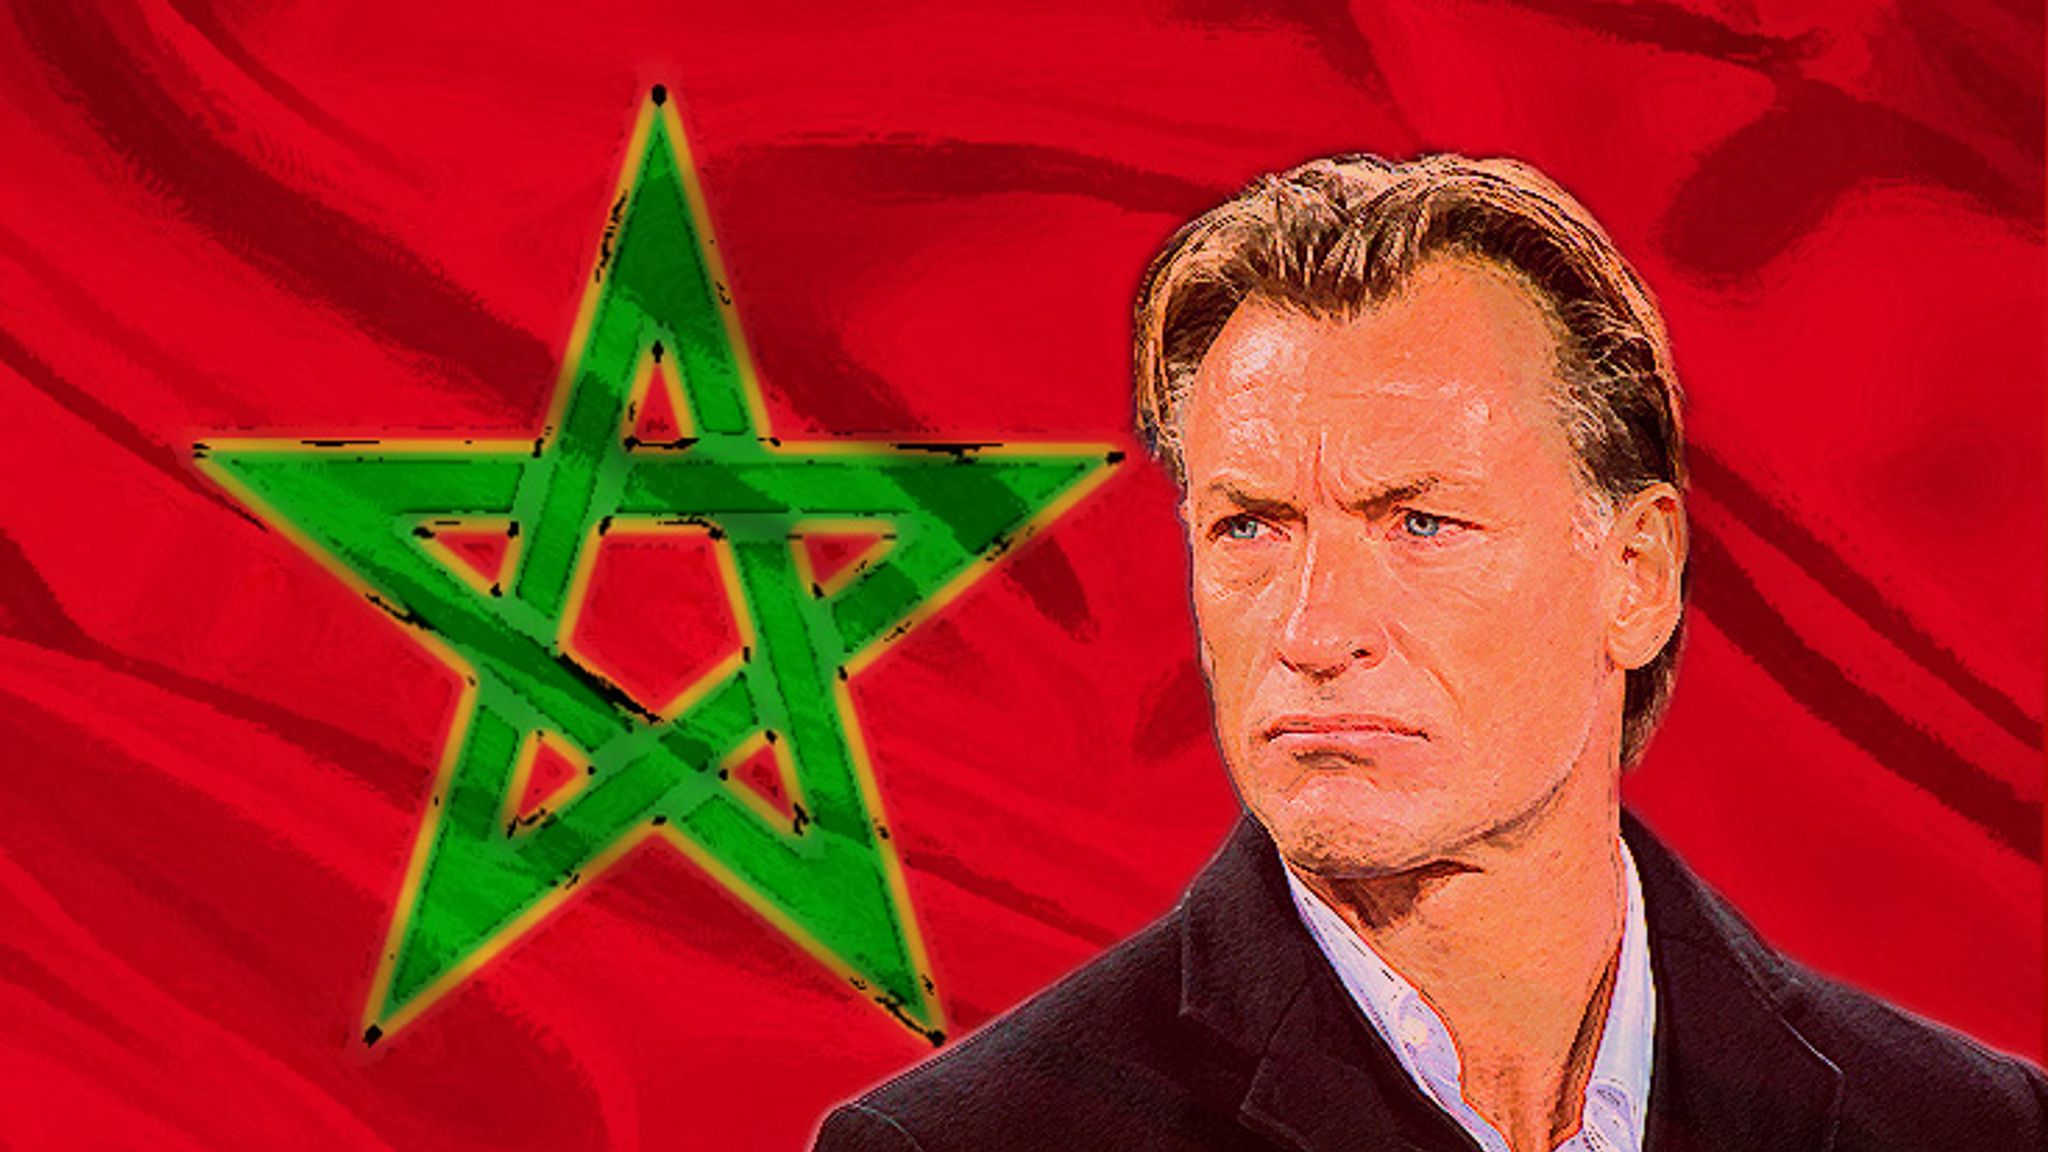 FIFA World Cup - Herve Renard, Manager of Morocco arrives.